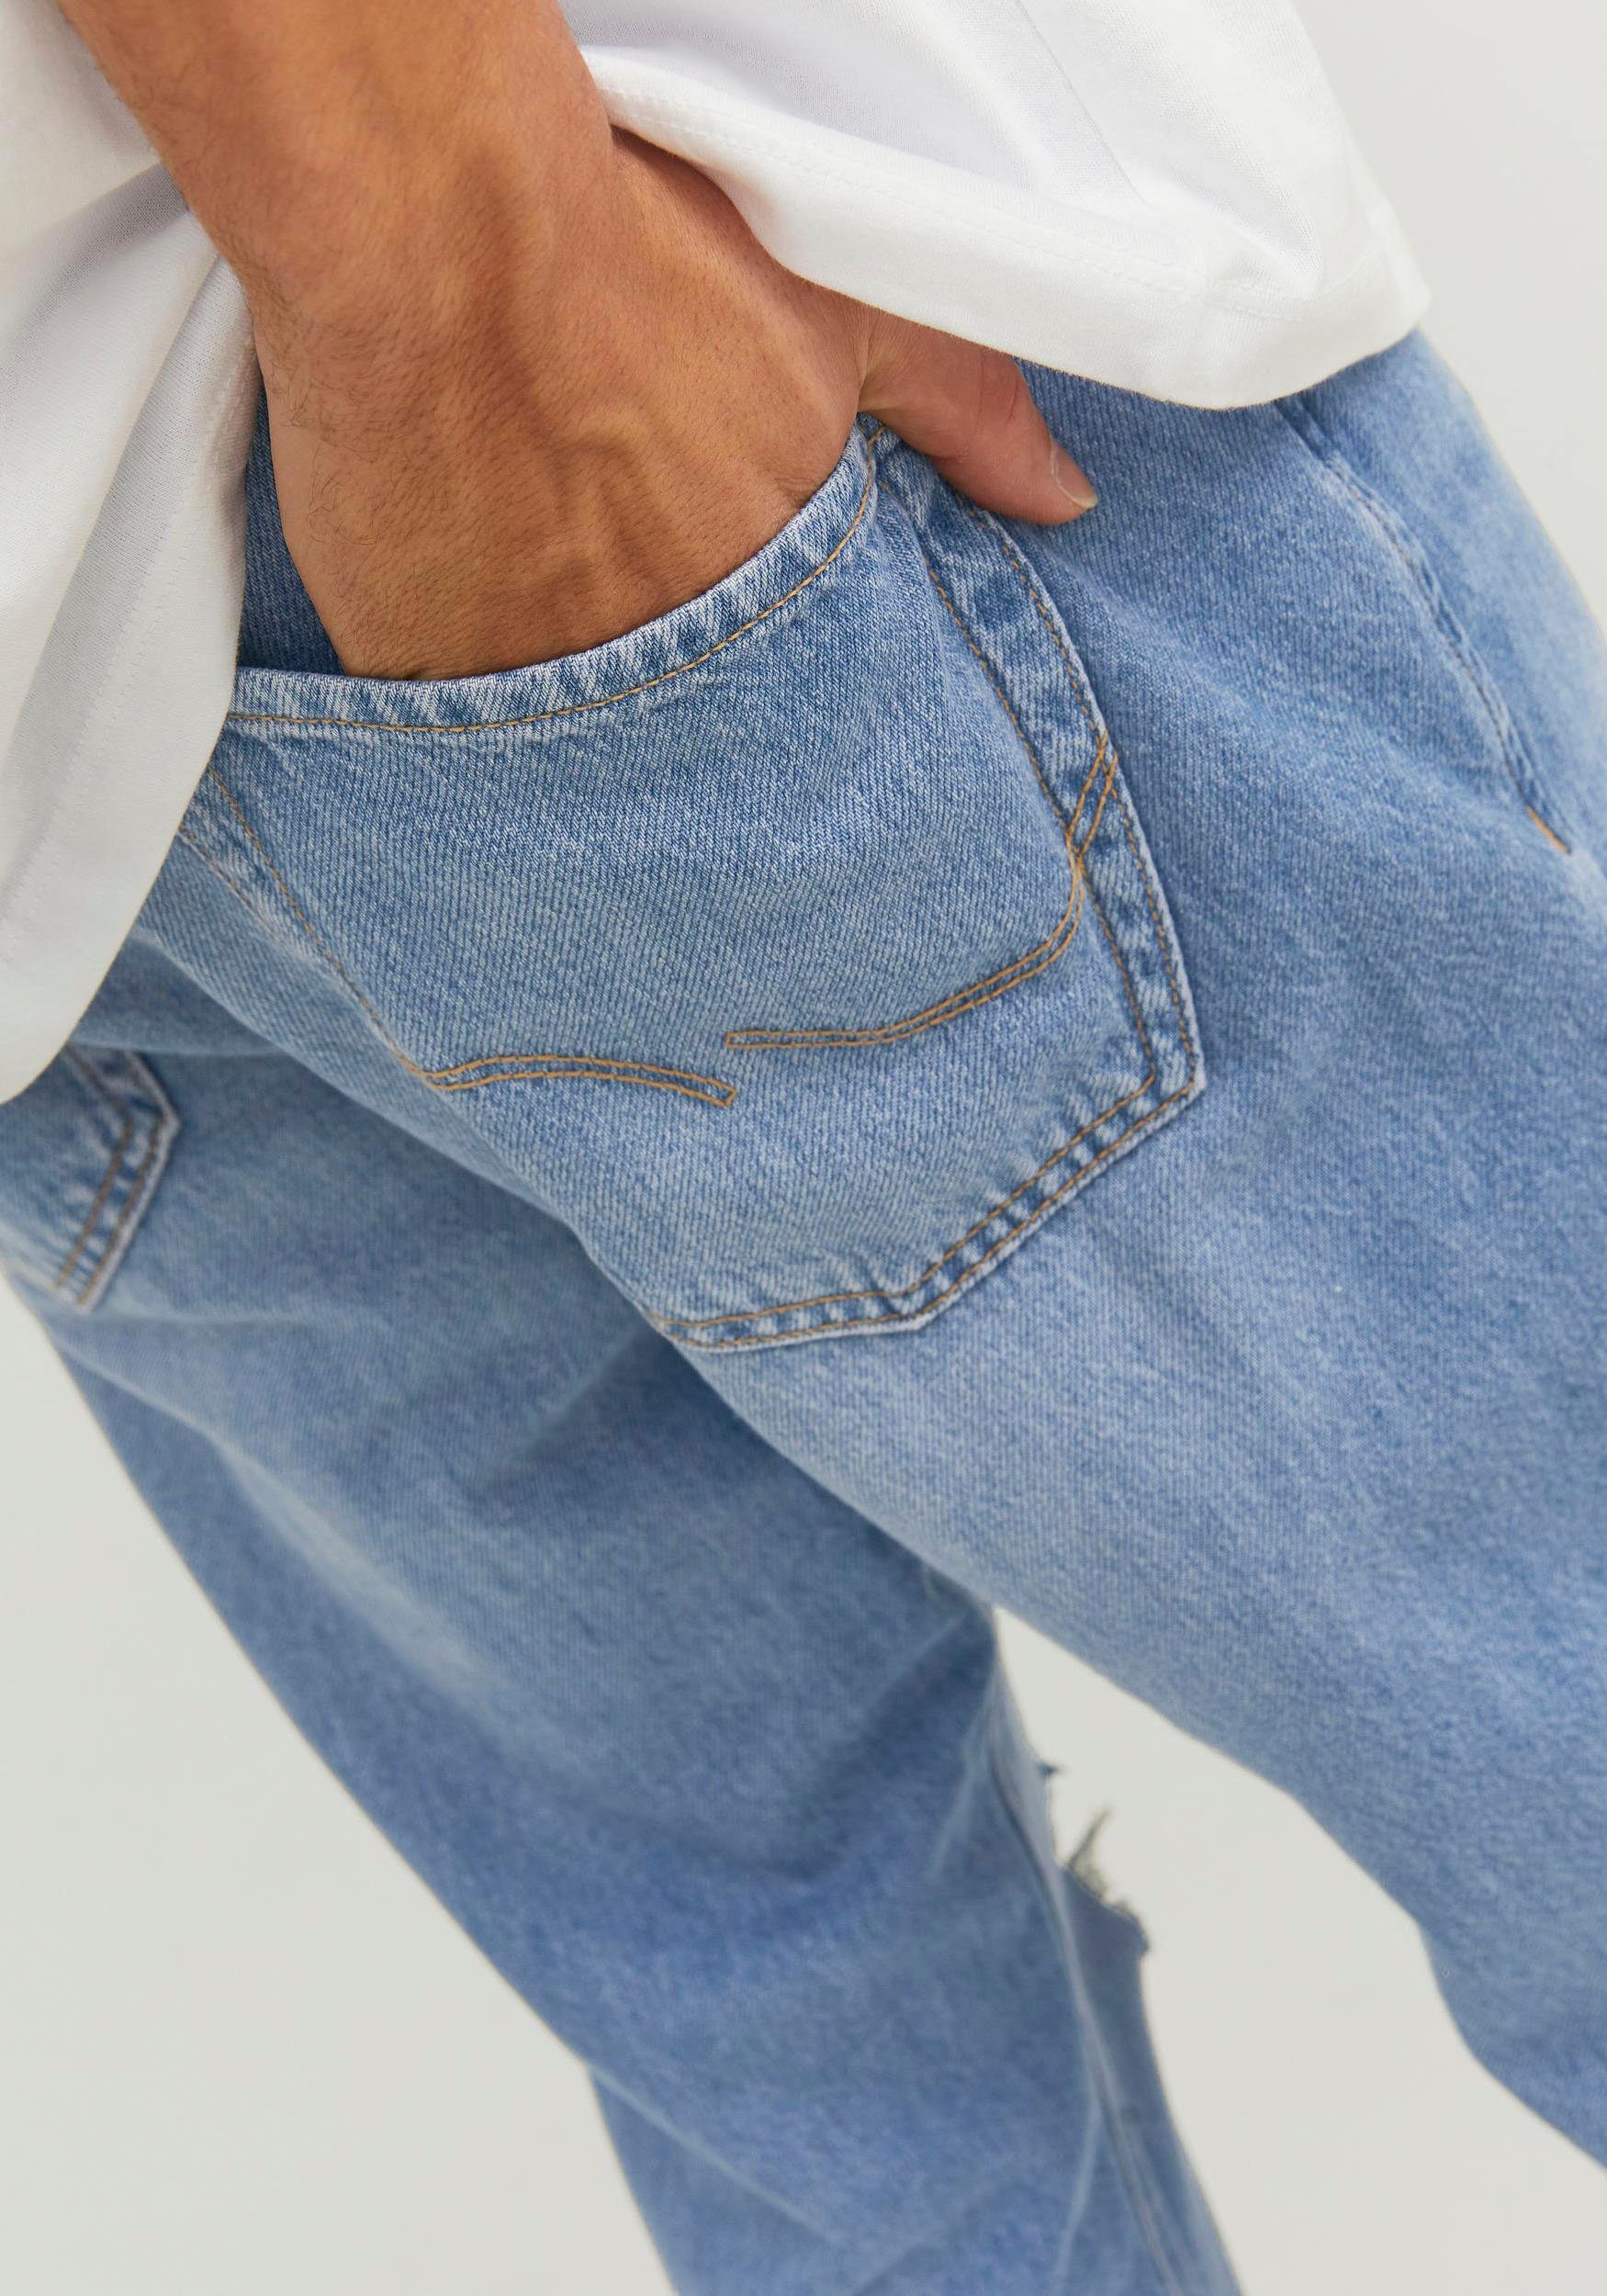 JJIFRANK CROPPED Jones Tapered-fit-Jeans light-blue-denim JJORIGINAL Jack &